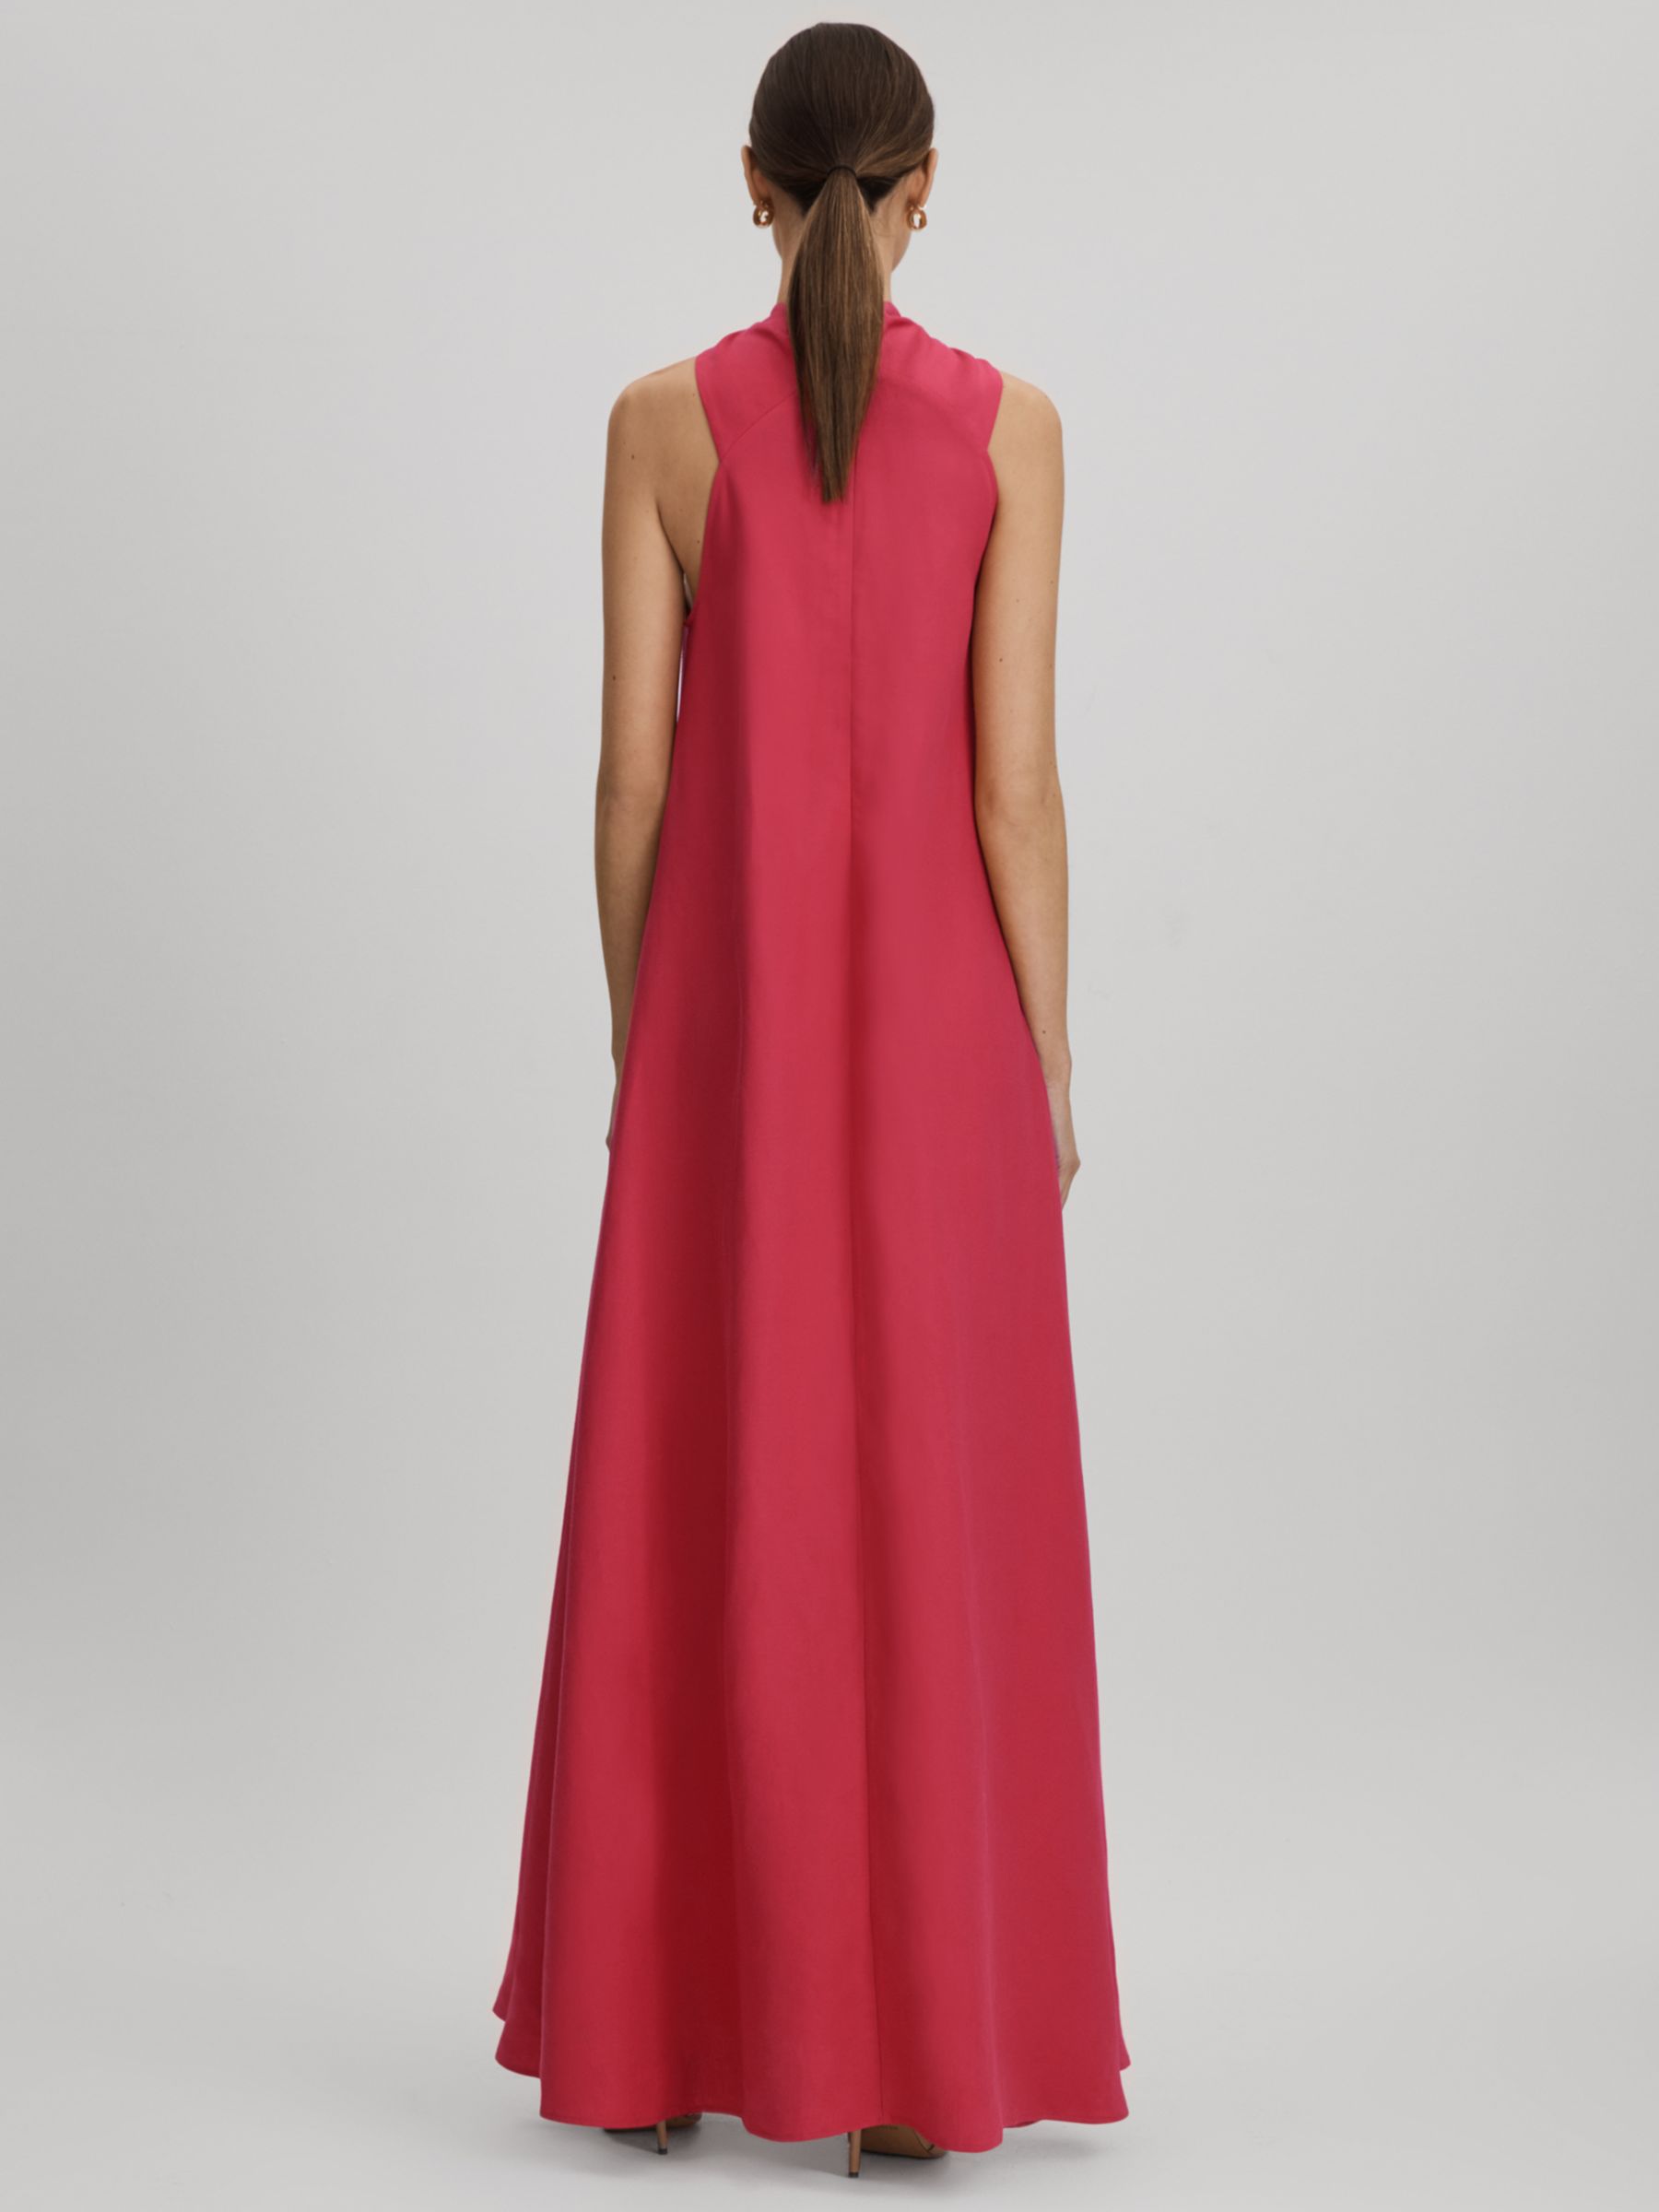 Reiss Odell Linen Blend Maxi Dress, Coral at John Lewis & Partners